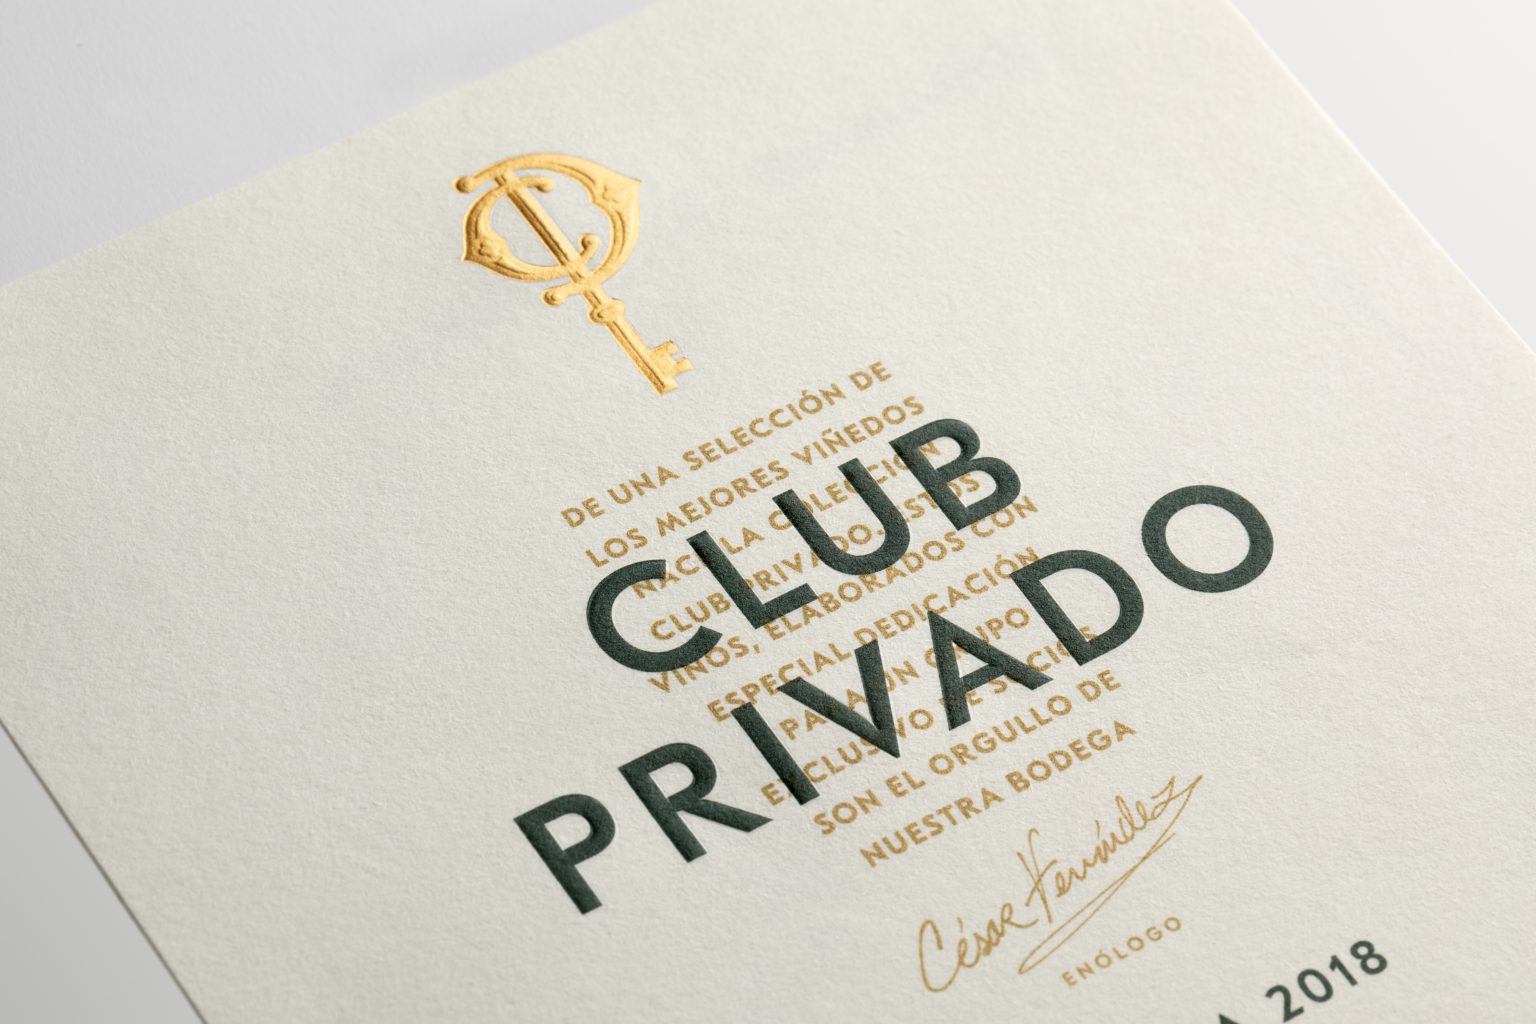 Club privado